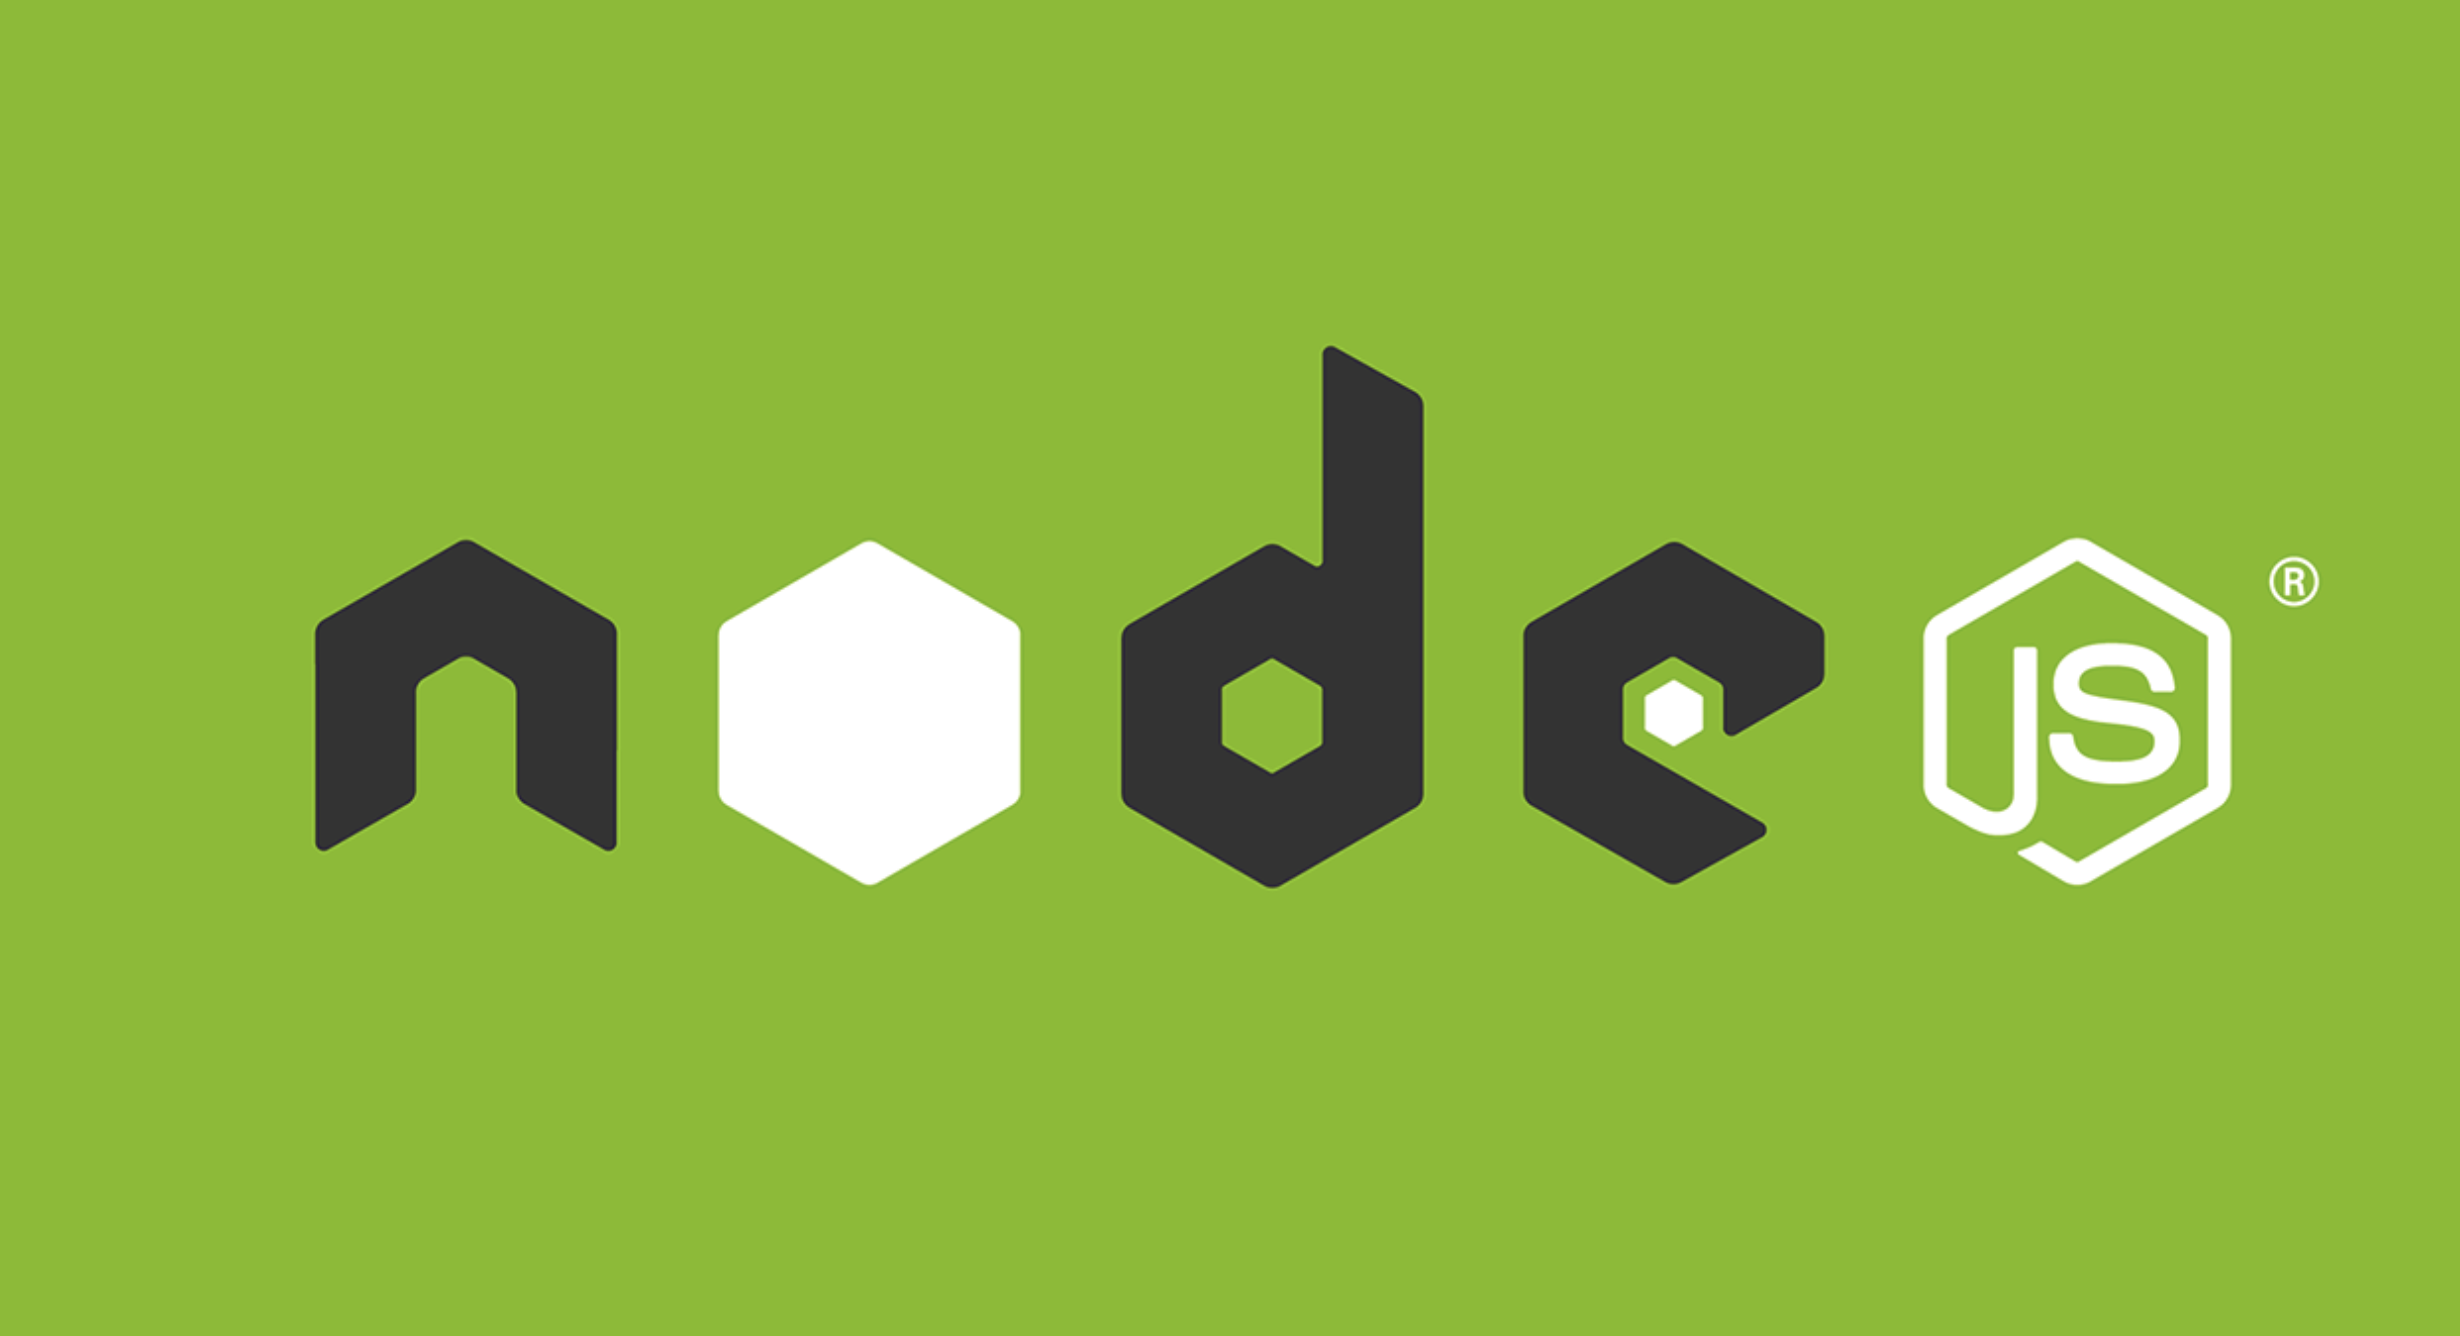 Https nodejs org. Node js. Node js логотип. Node js Разработчик. Архитектура node js приложений.